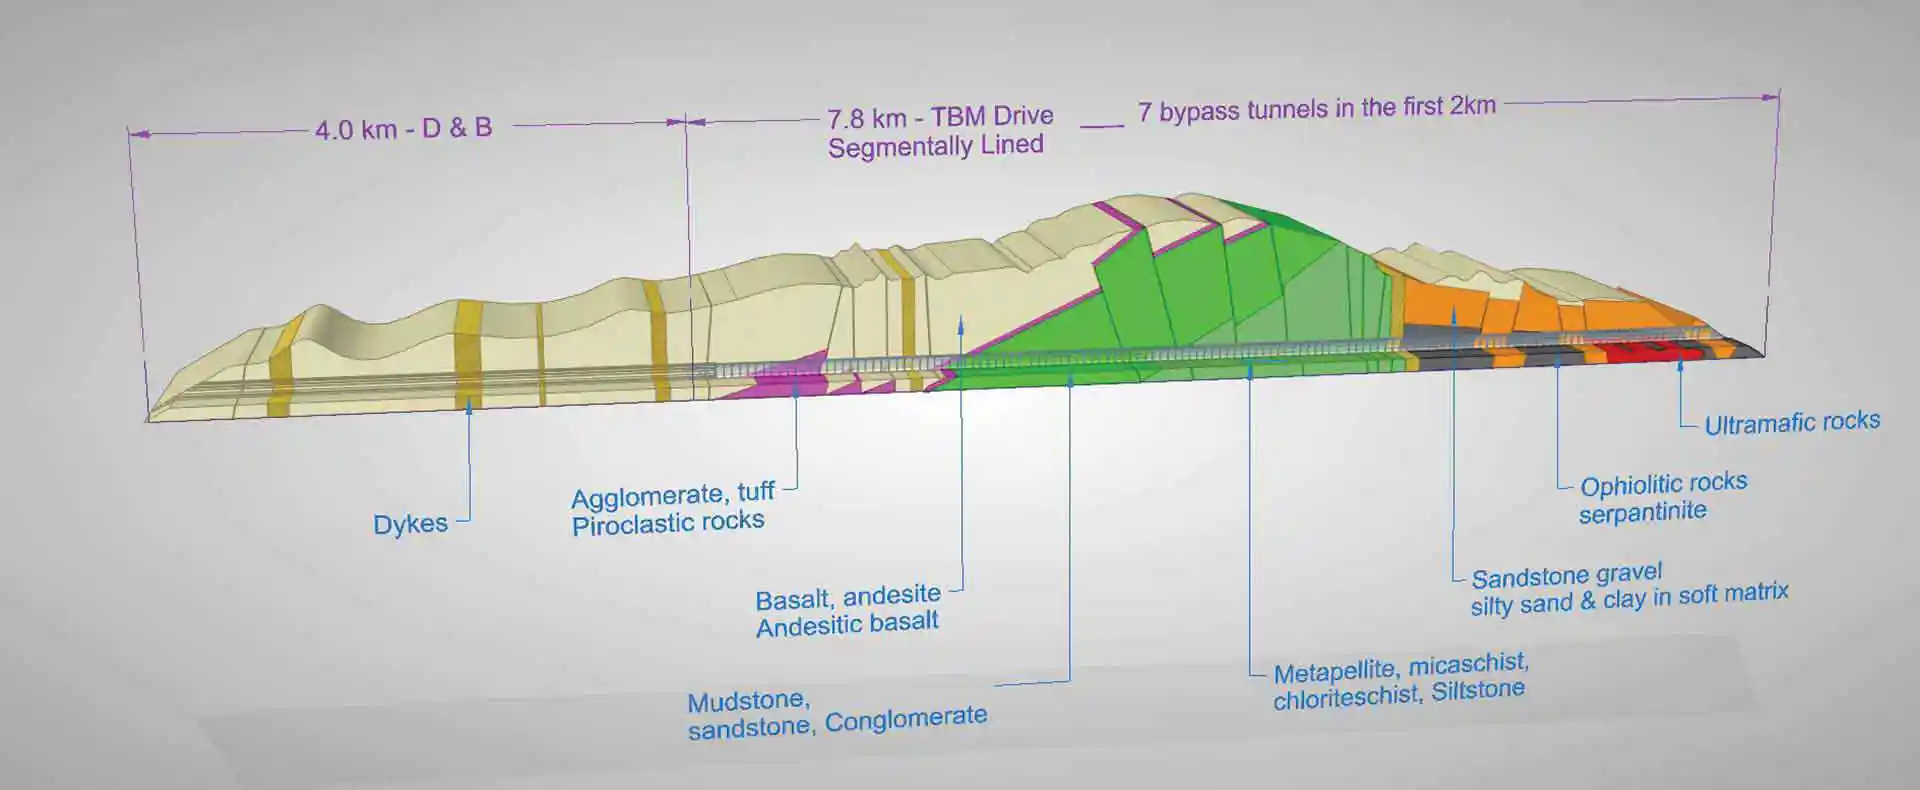 TBM-driven tunnel required segmental lining